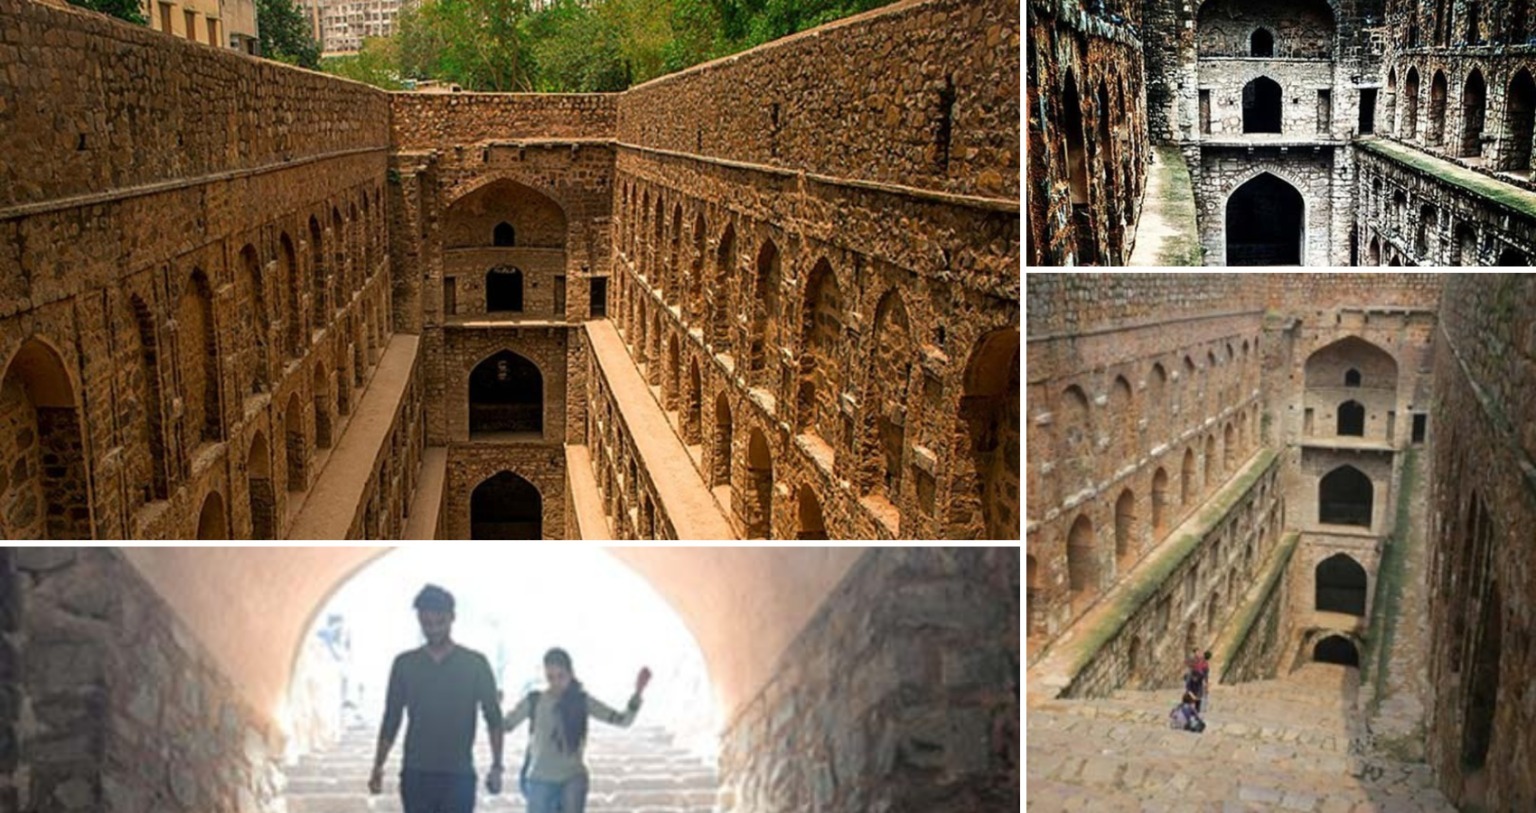 Agrasen Ki Baoli: A Subterranean Architectural Wonder